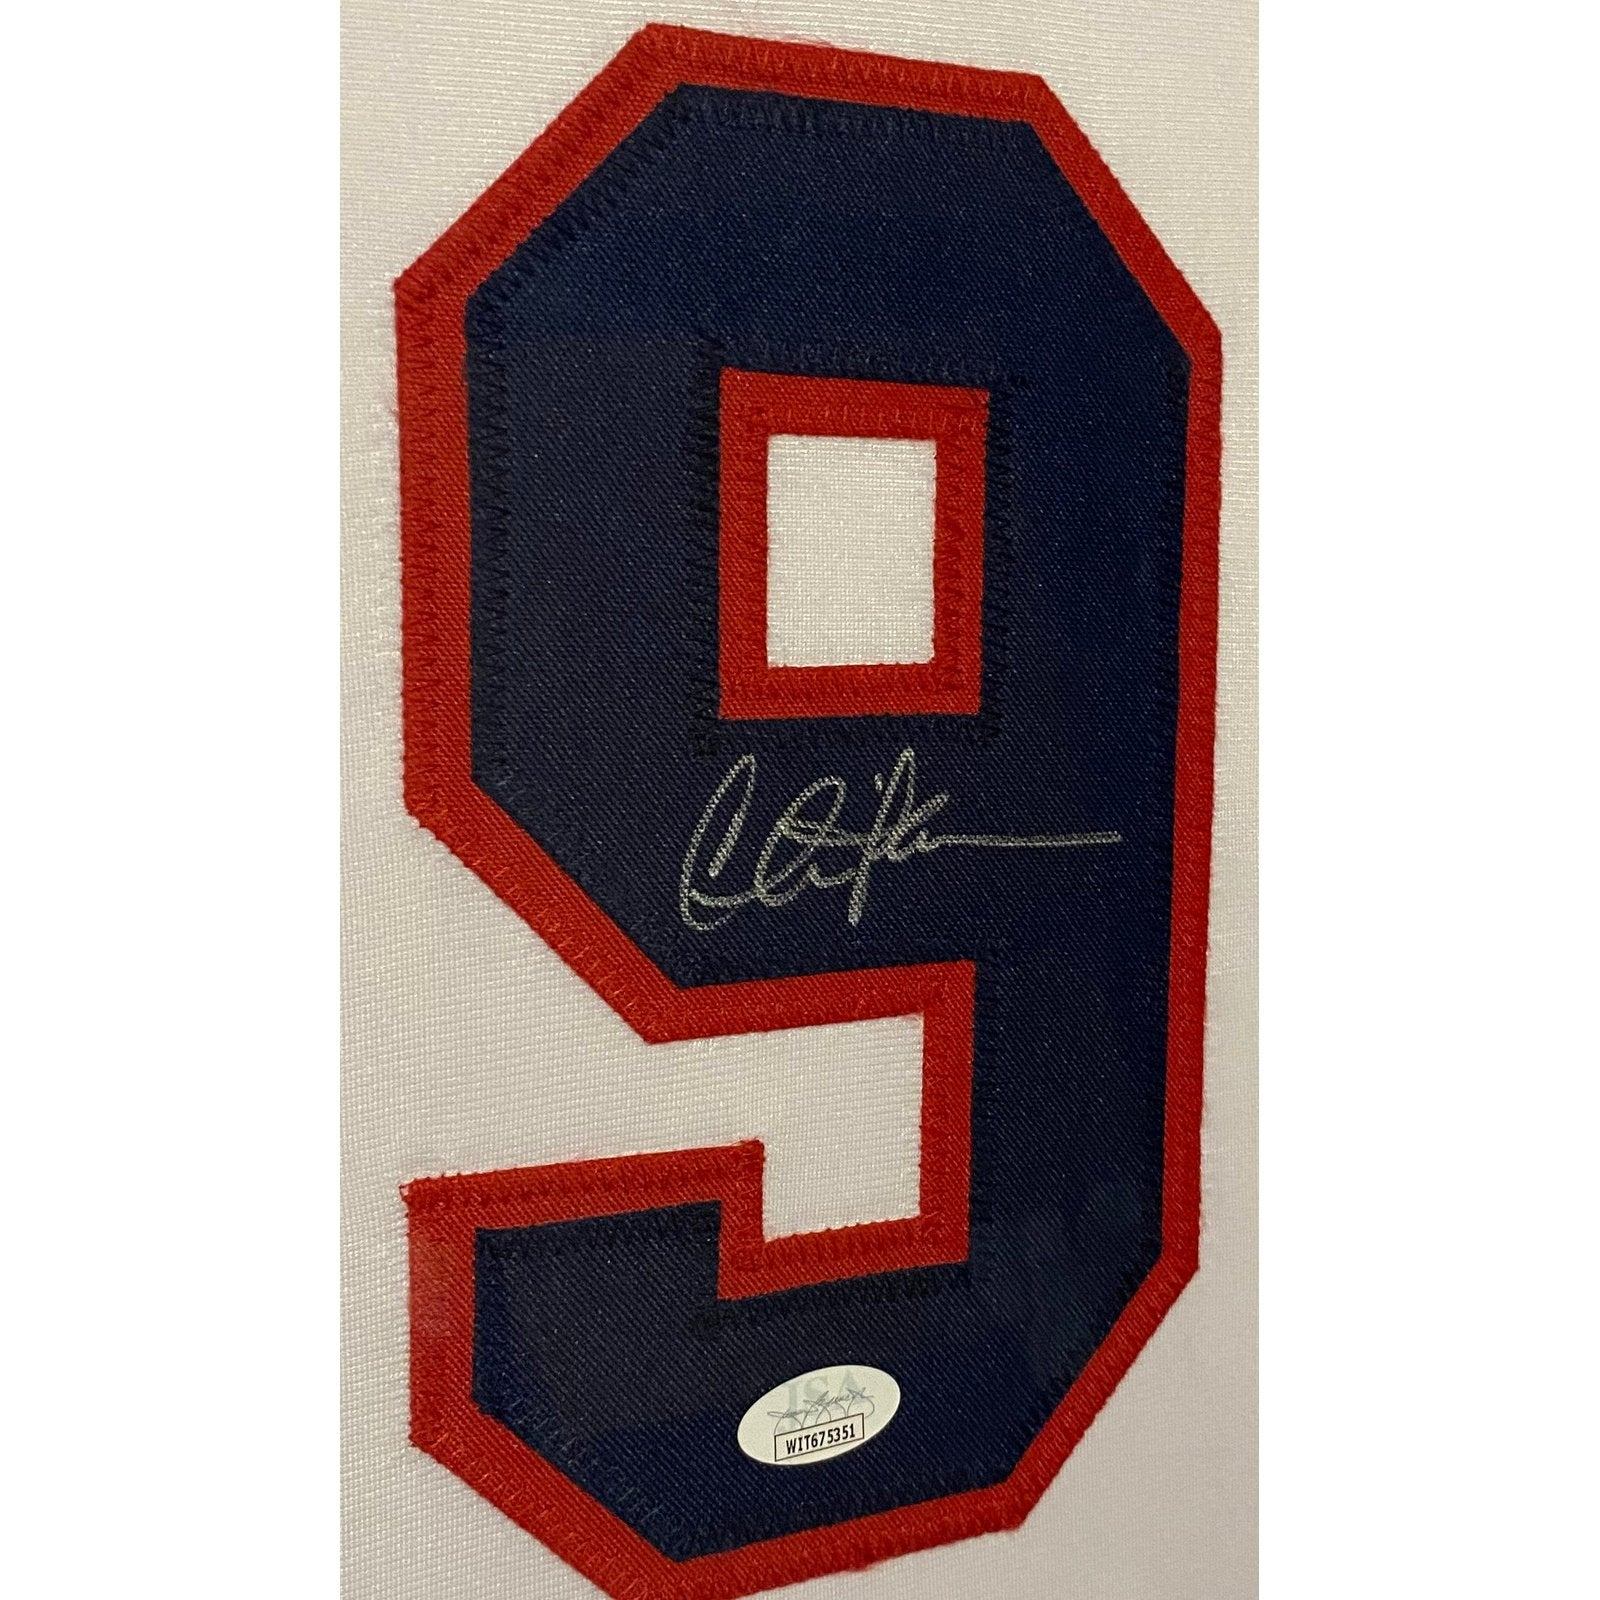 Charlie Sheen Signed Framed Jersey JSA Autographed Major League Wild Thing